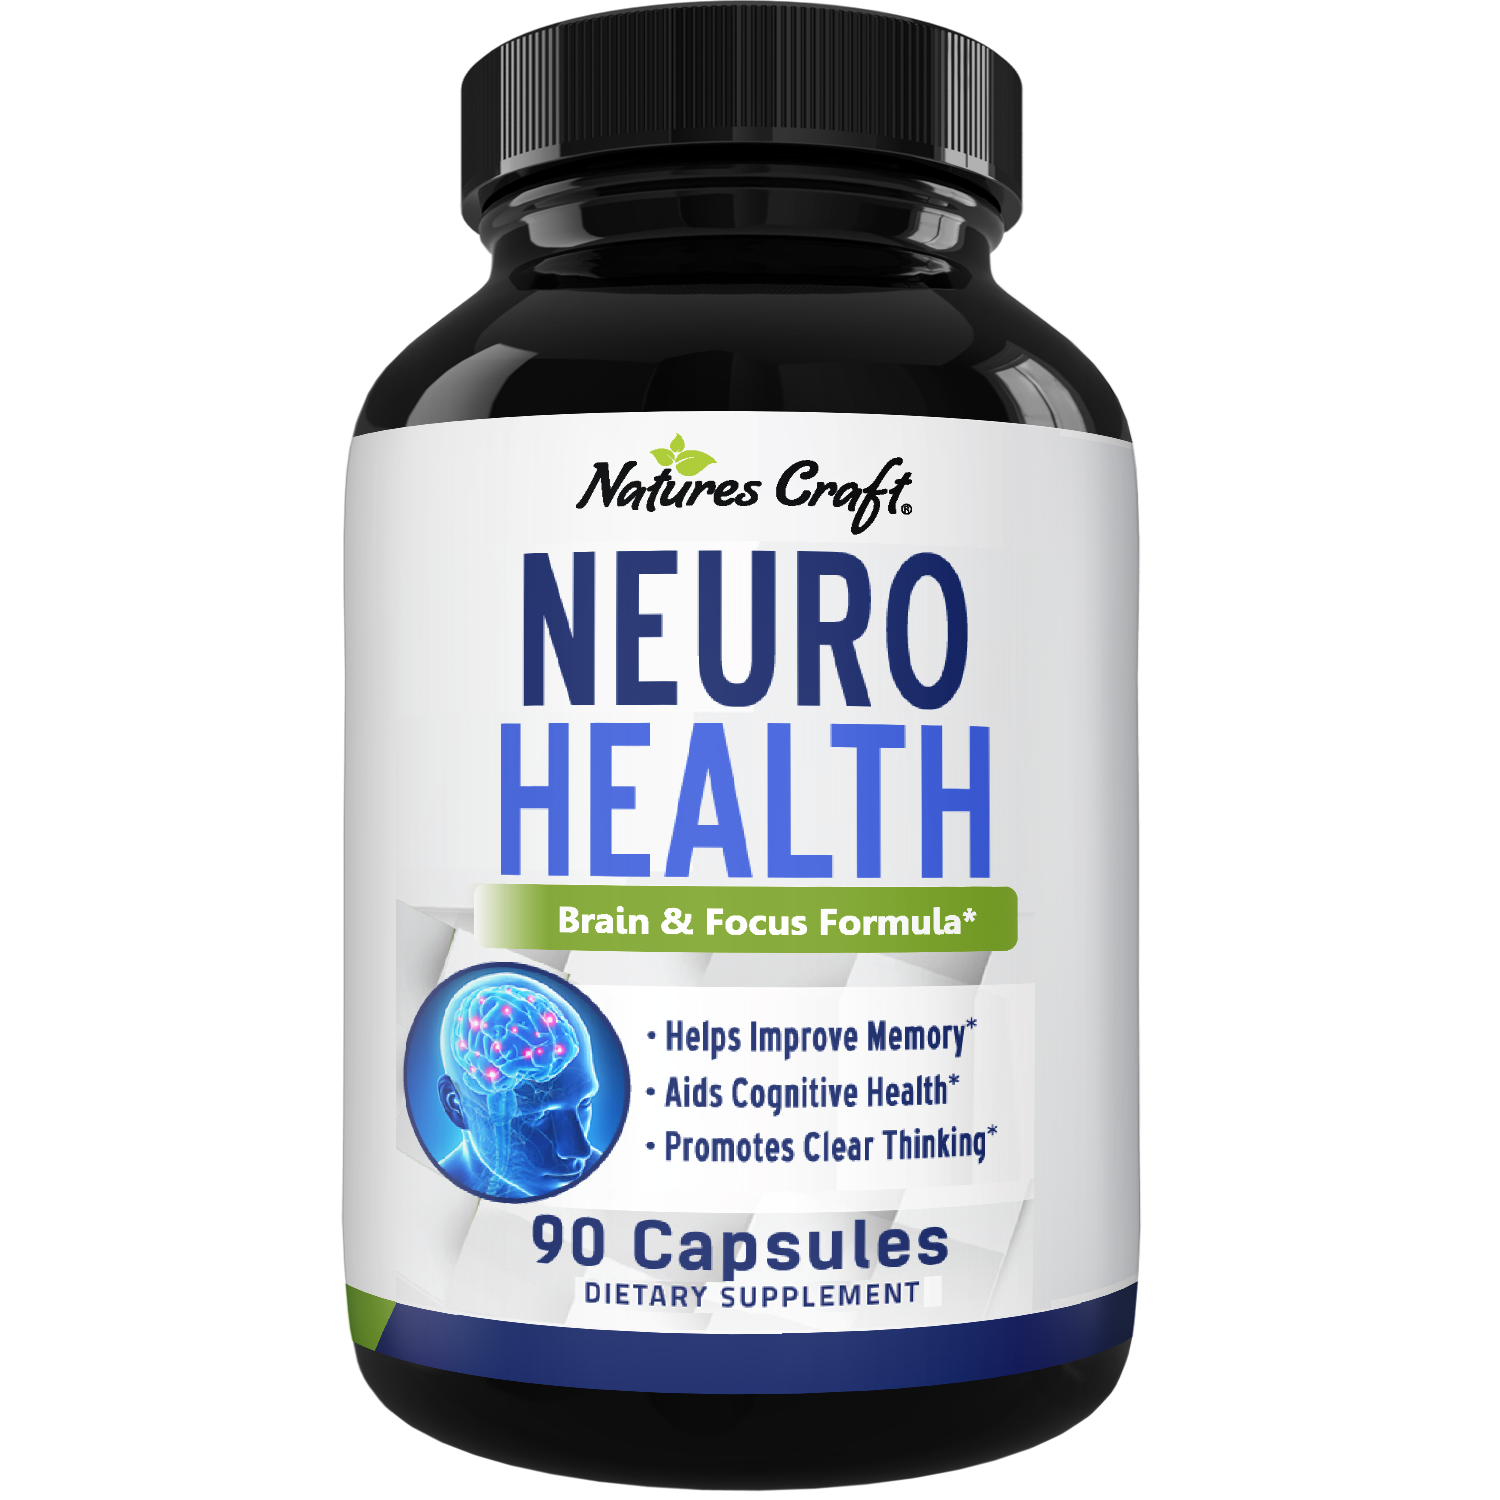 Neuro Health Brain and Focus Formula - 90 Capsules